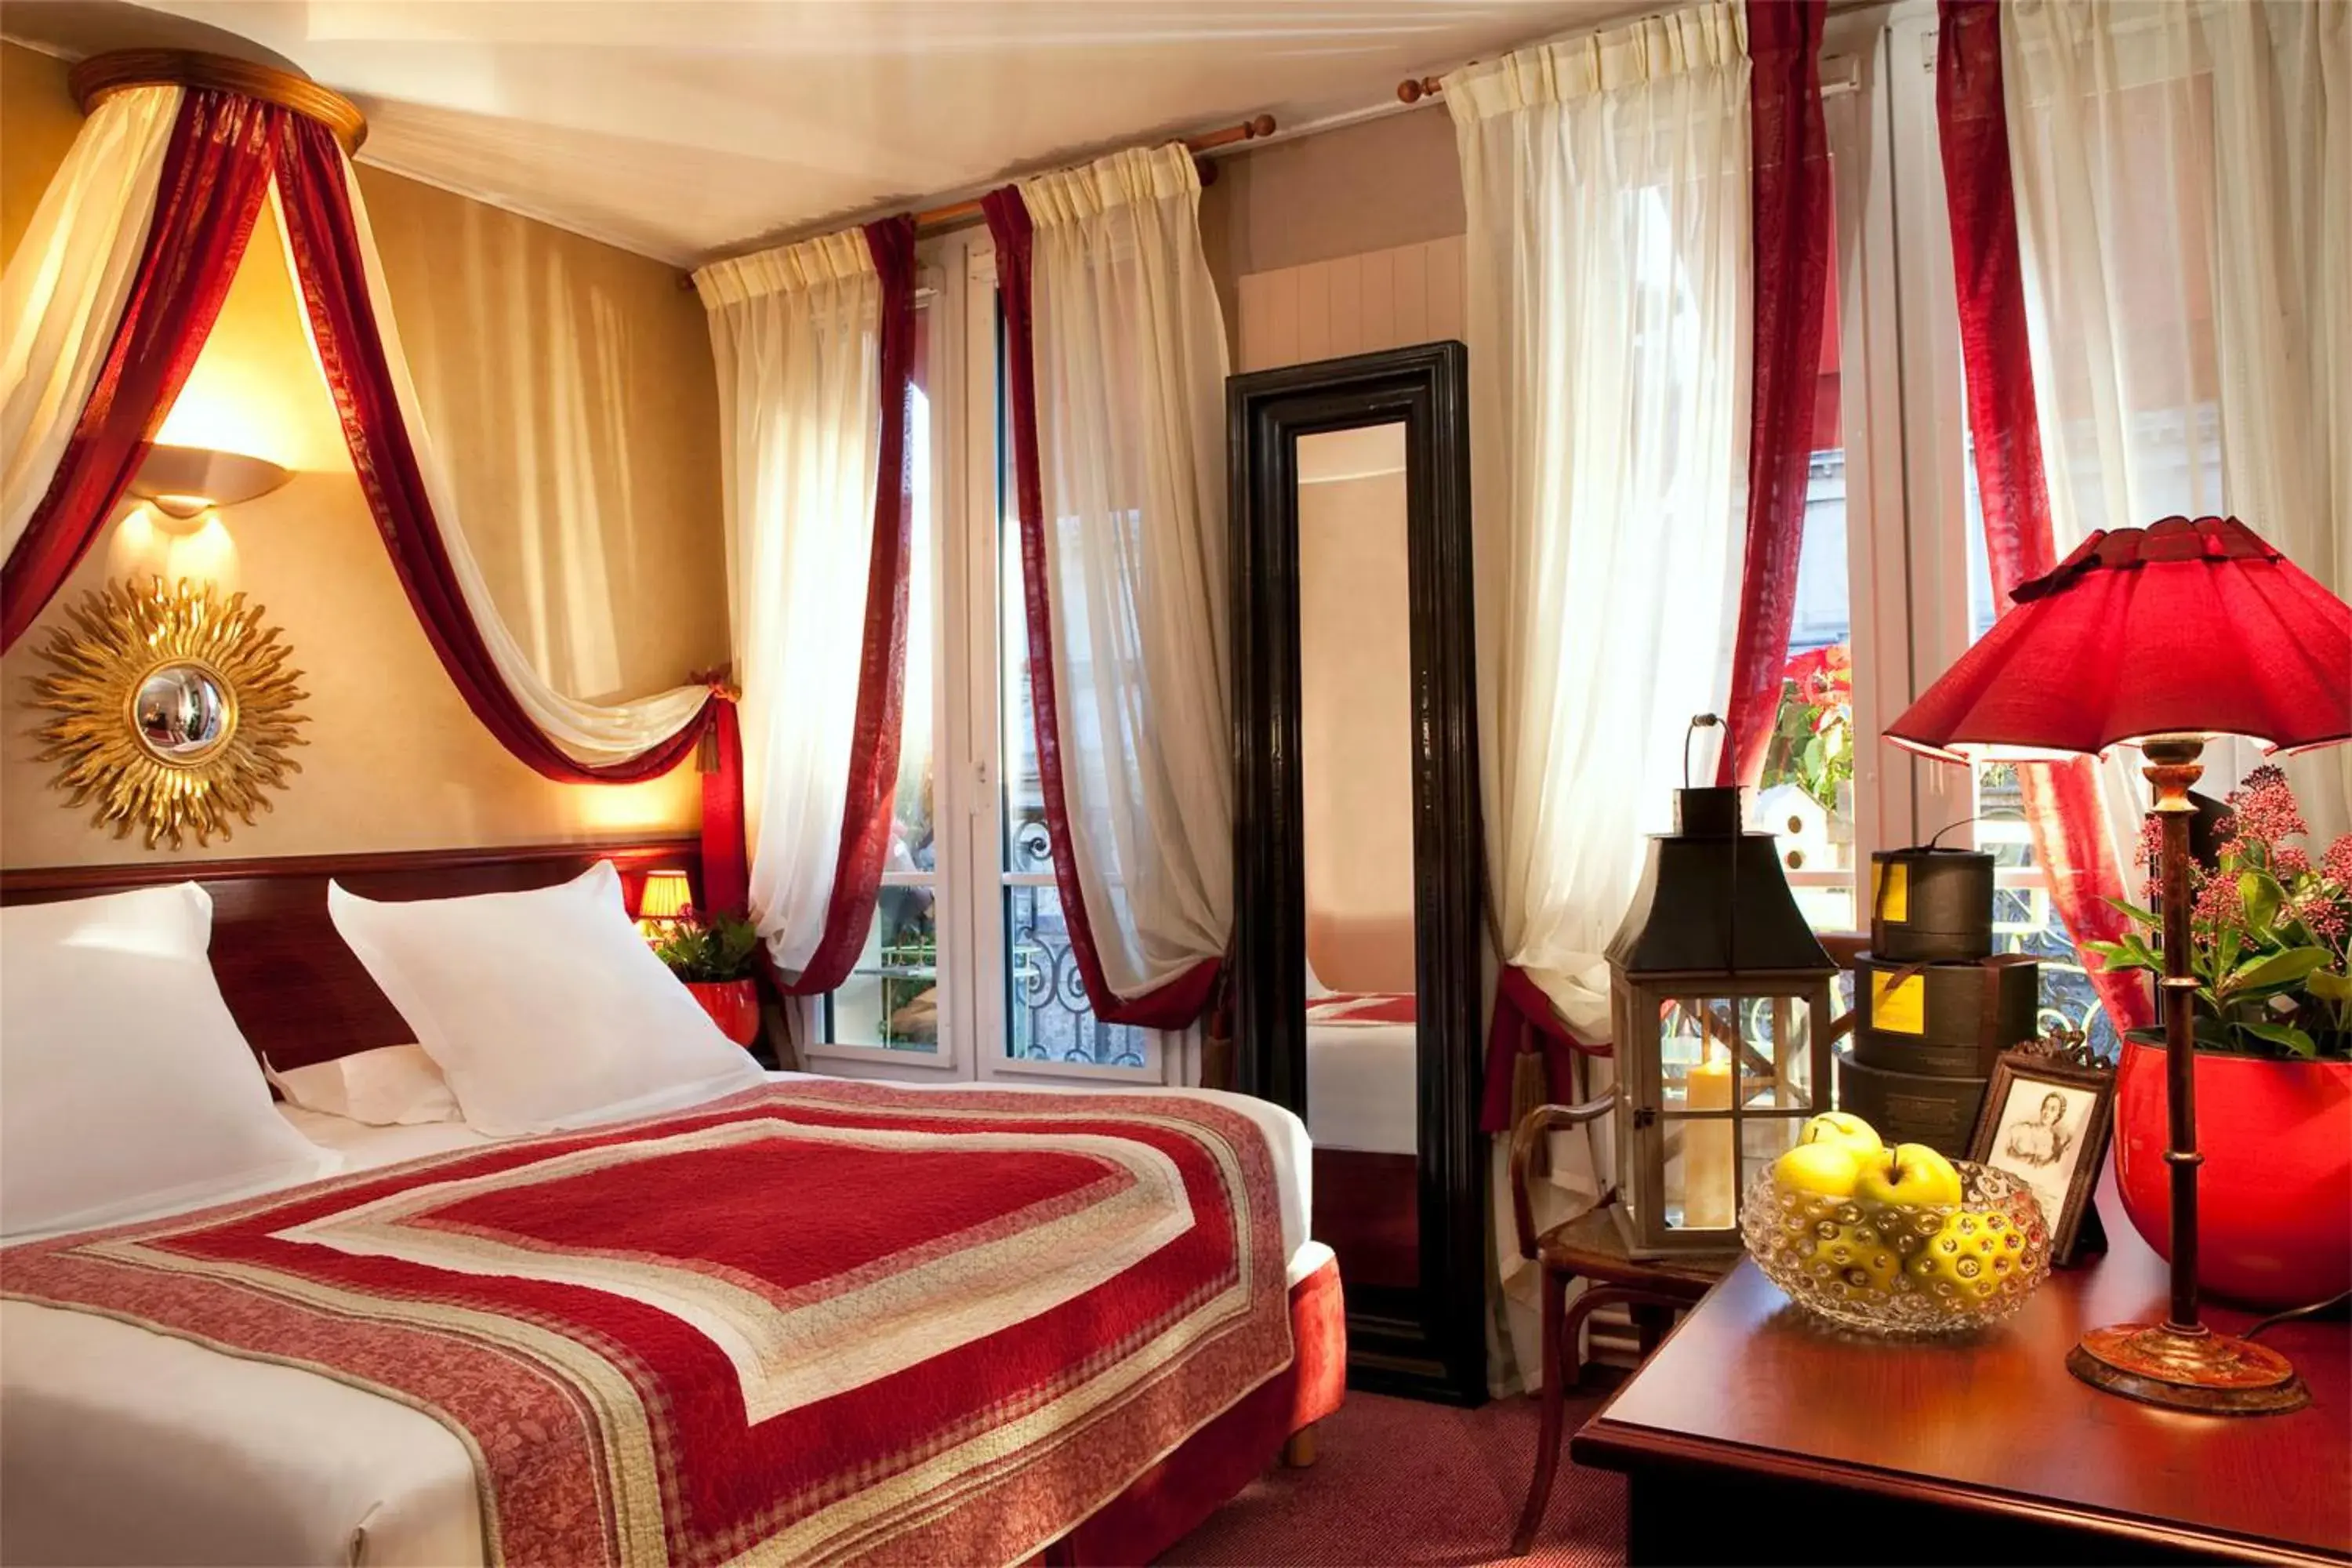 Bedroom, Room Photo in Hotel Britannique